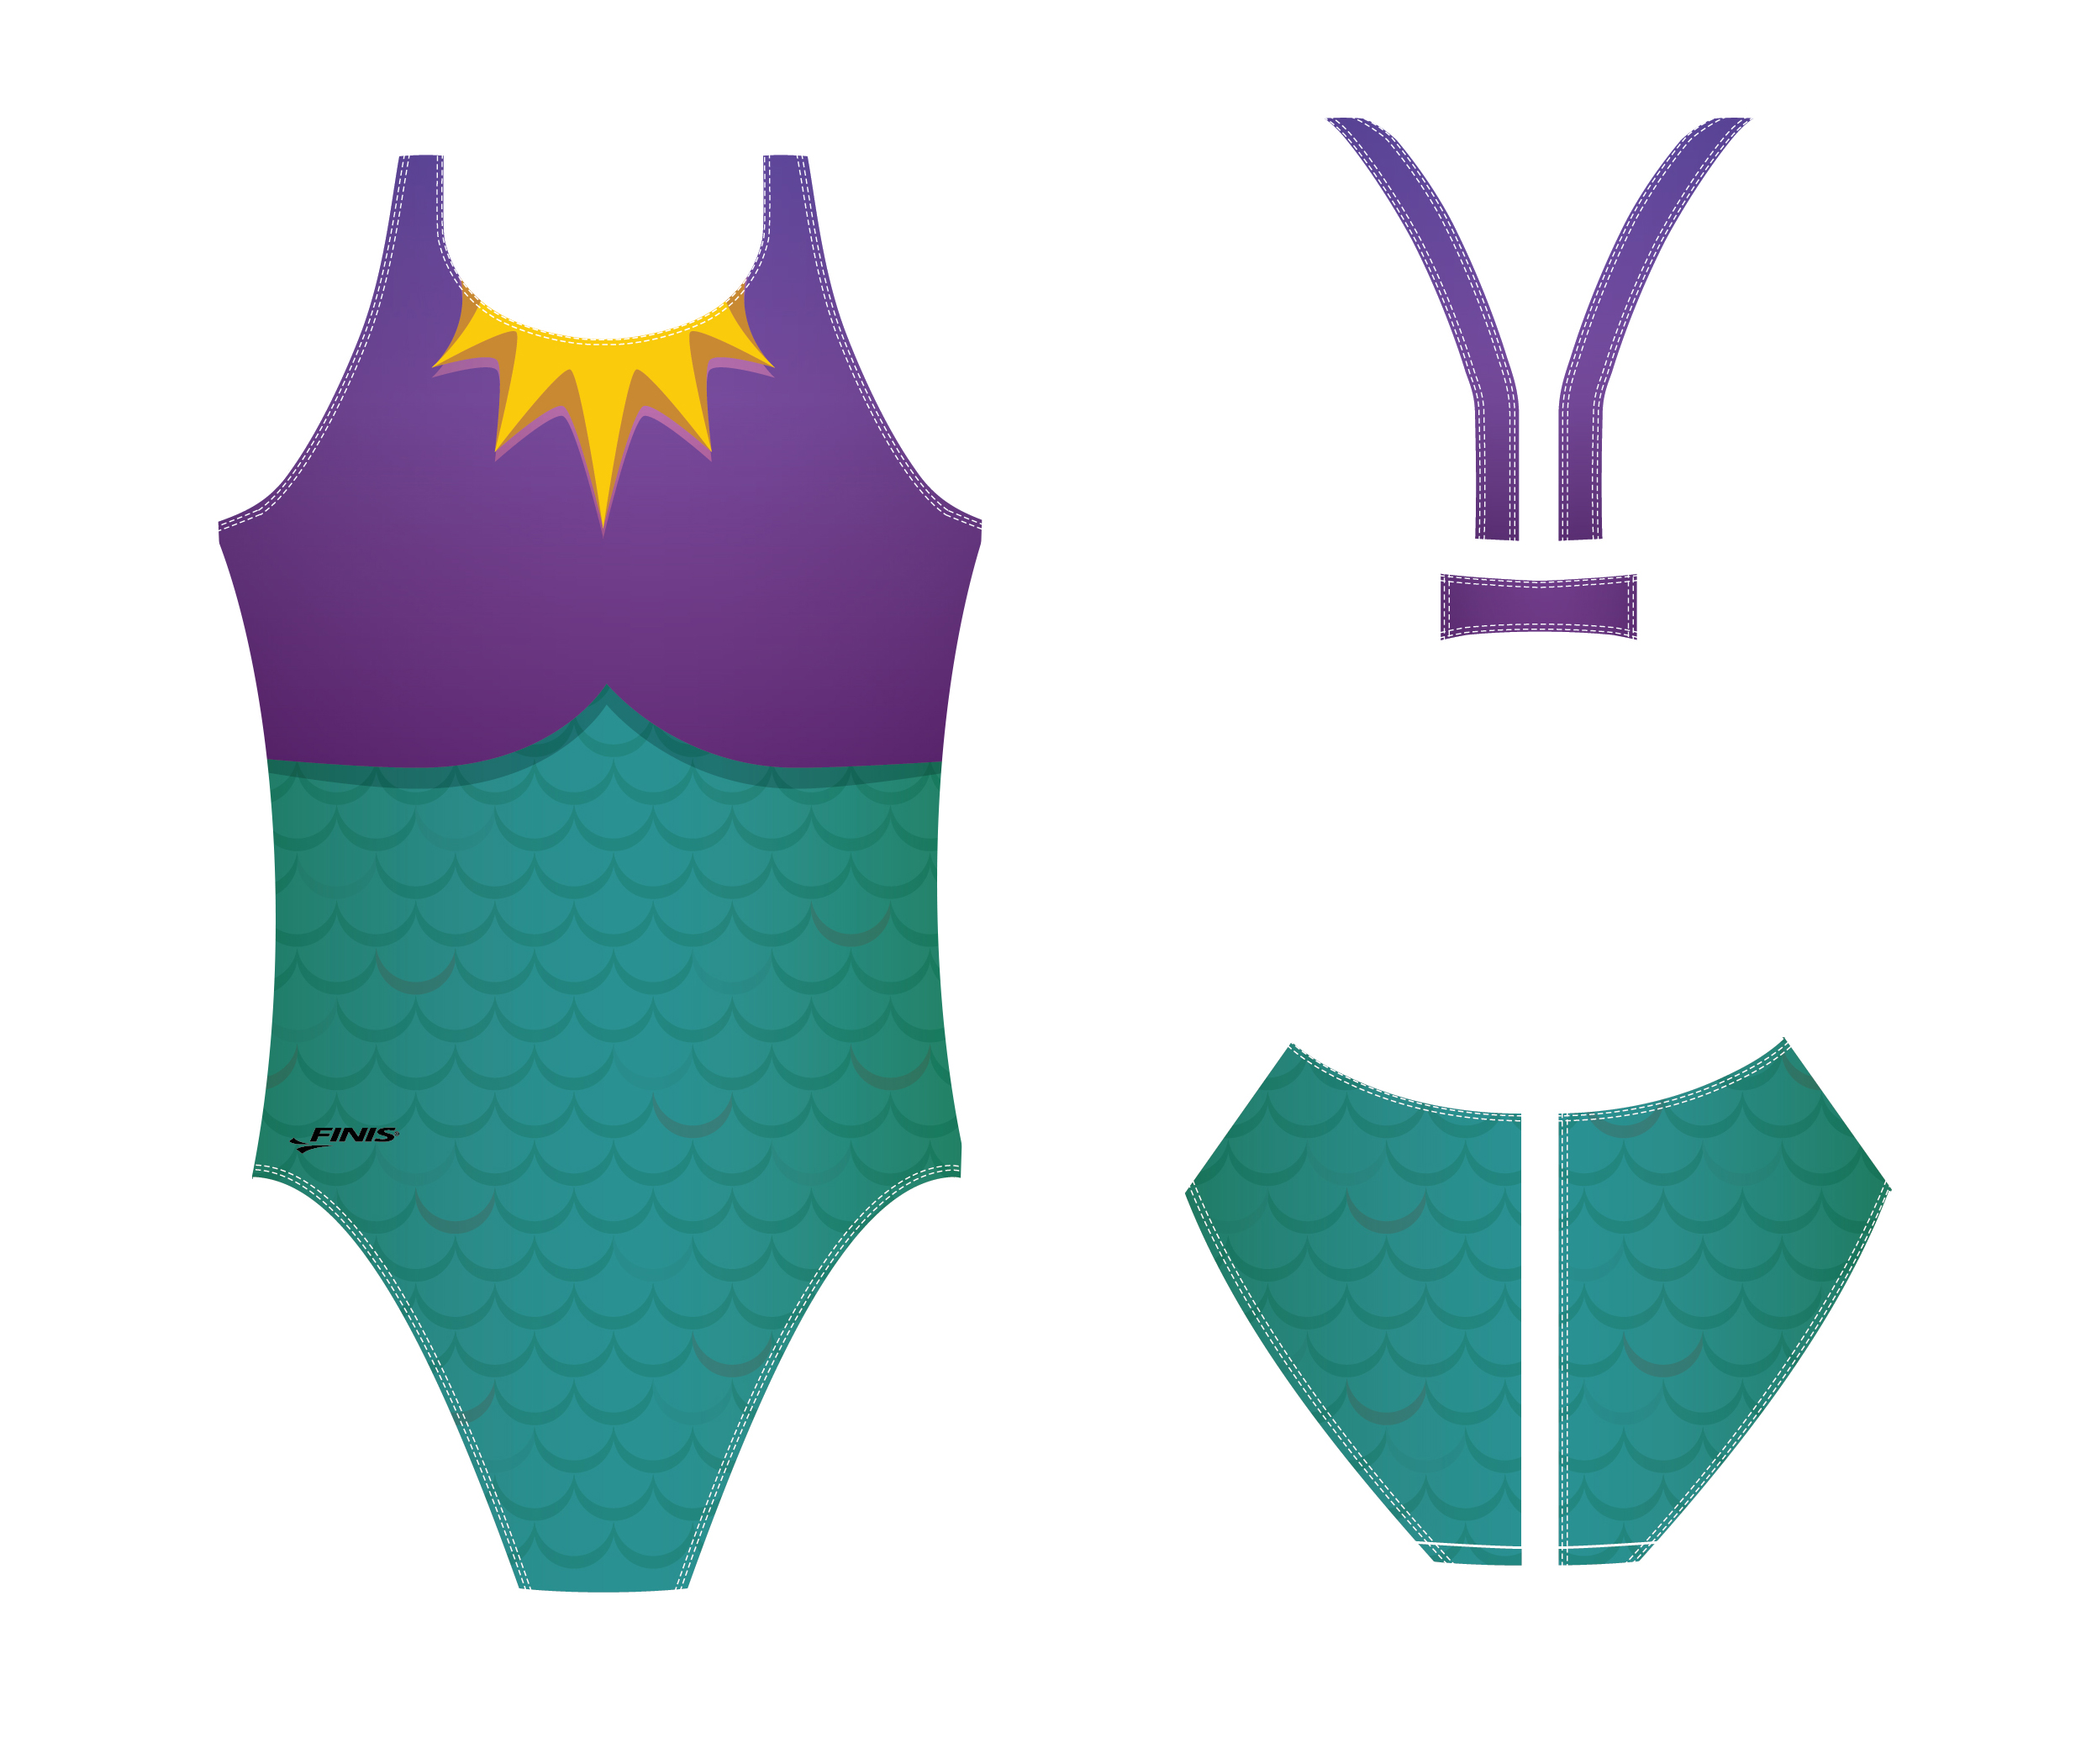 25x50swim-Bladeback-Design-Mermaid-Mask.jpg